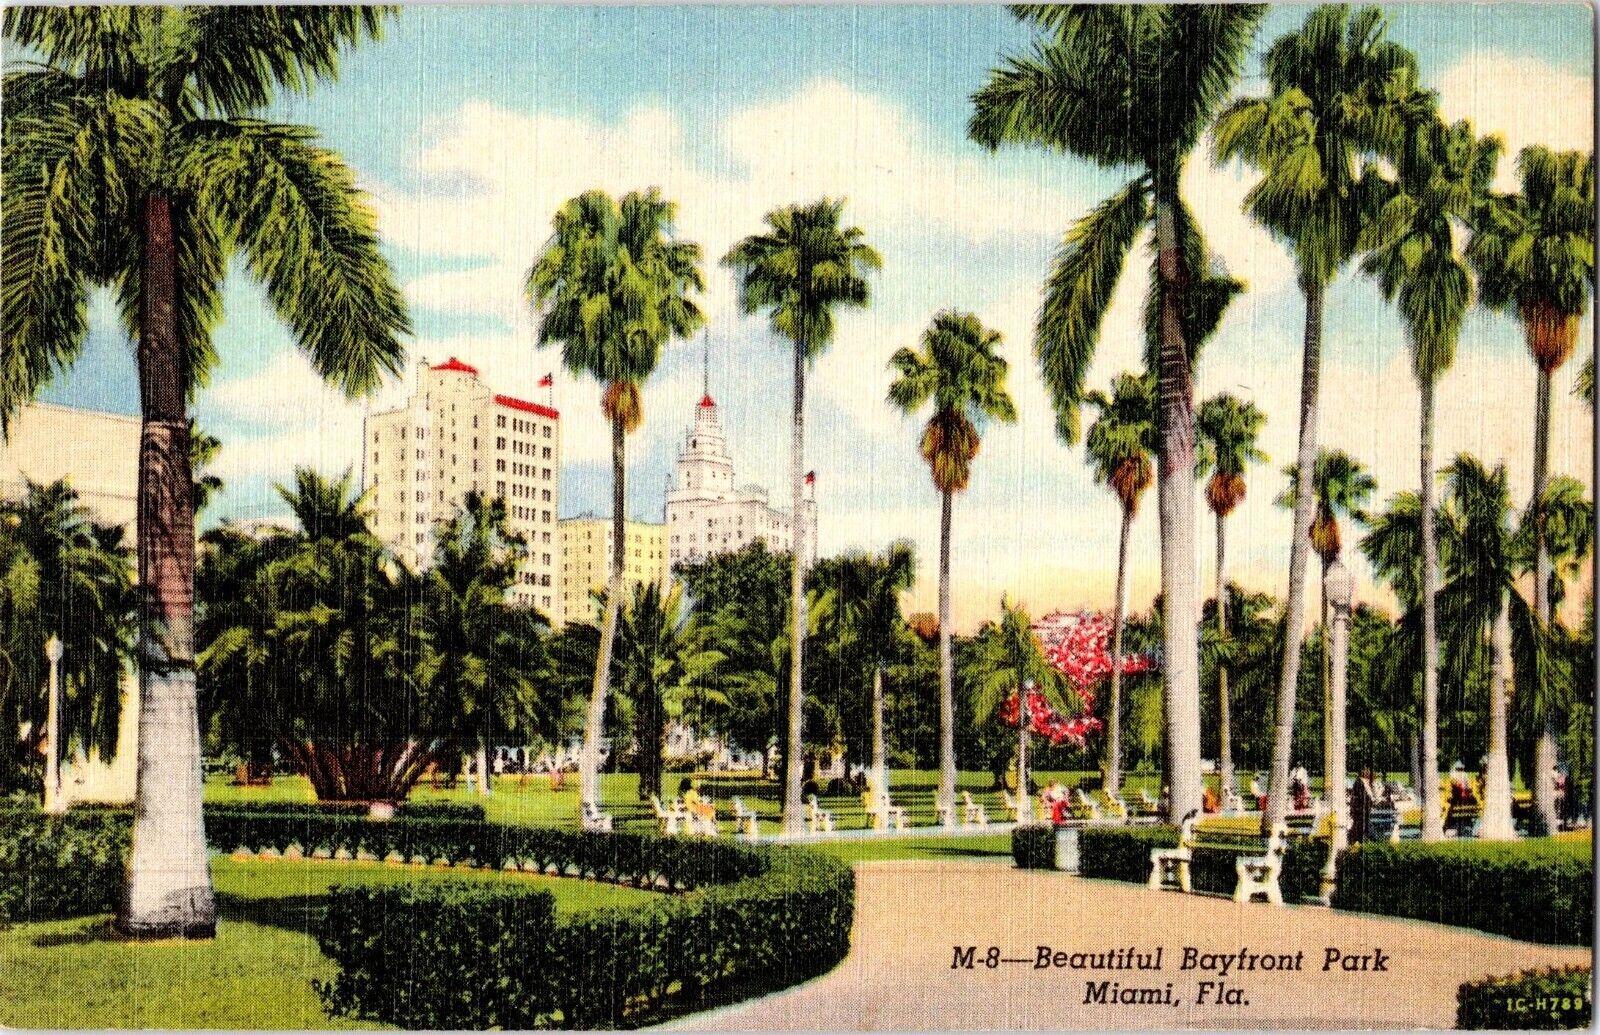 1940s Miami, Florida Bayfront Park Vintage Linen Postcard